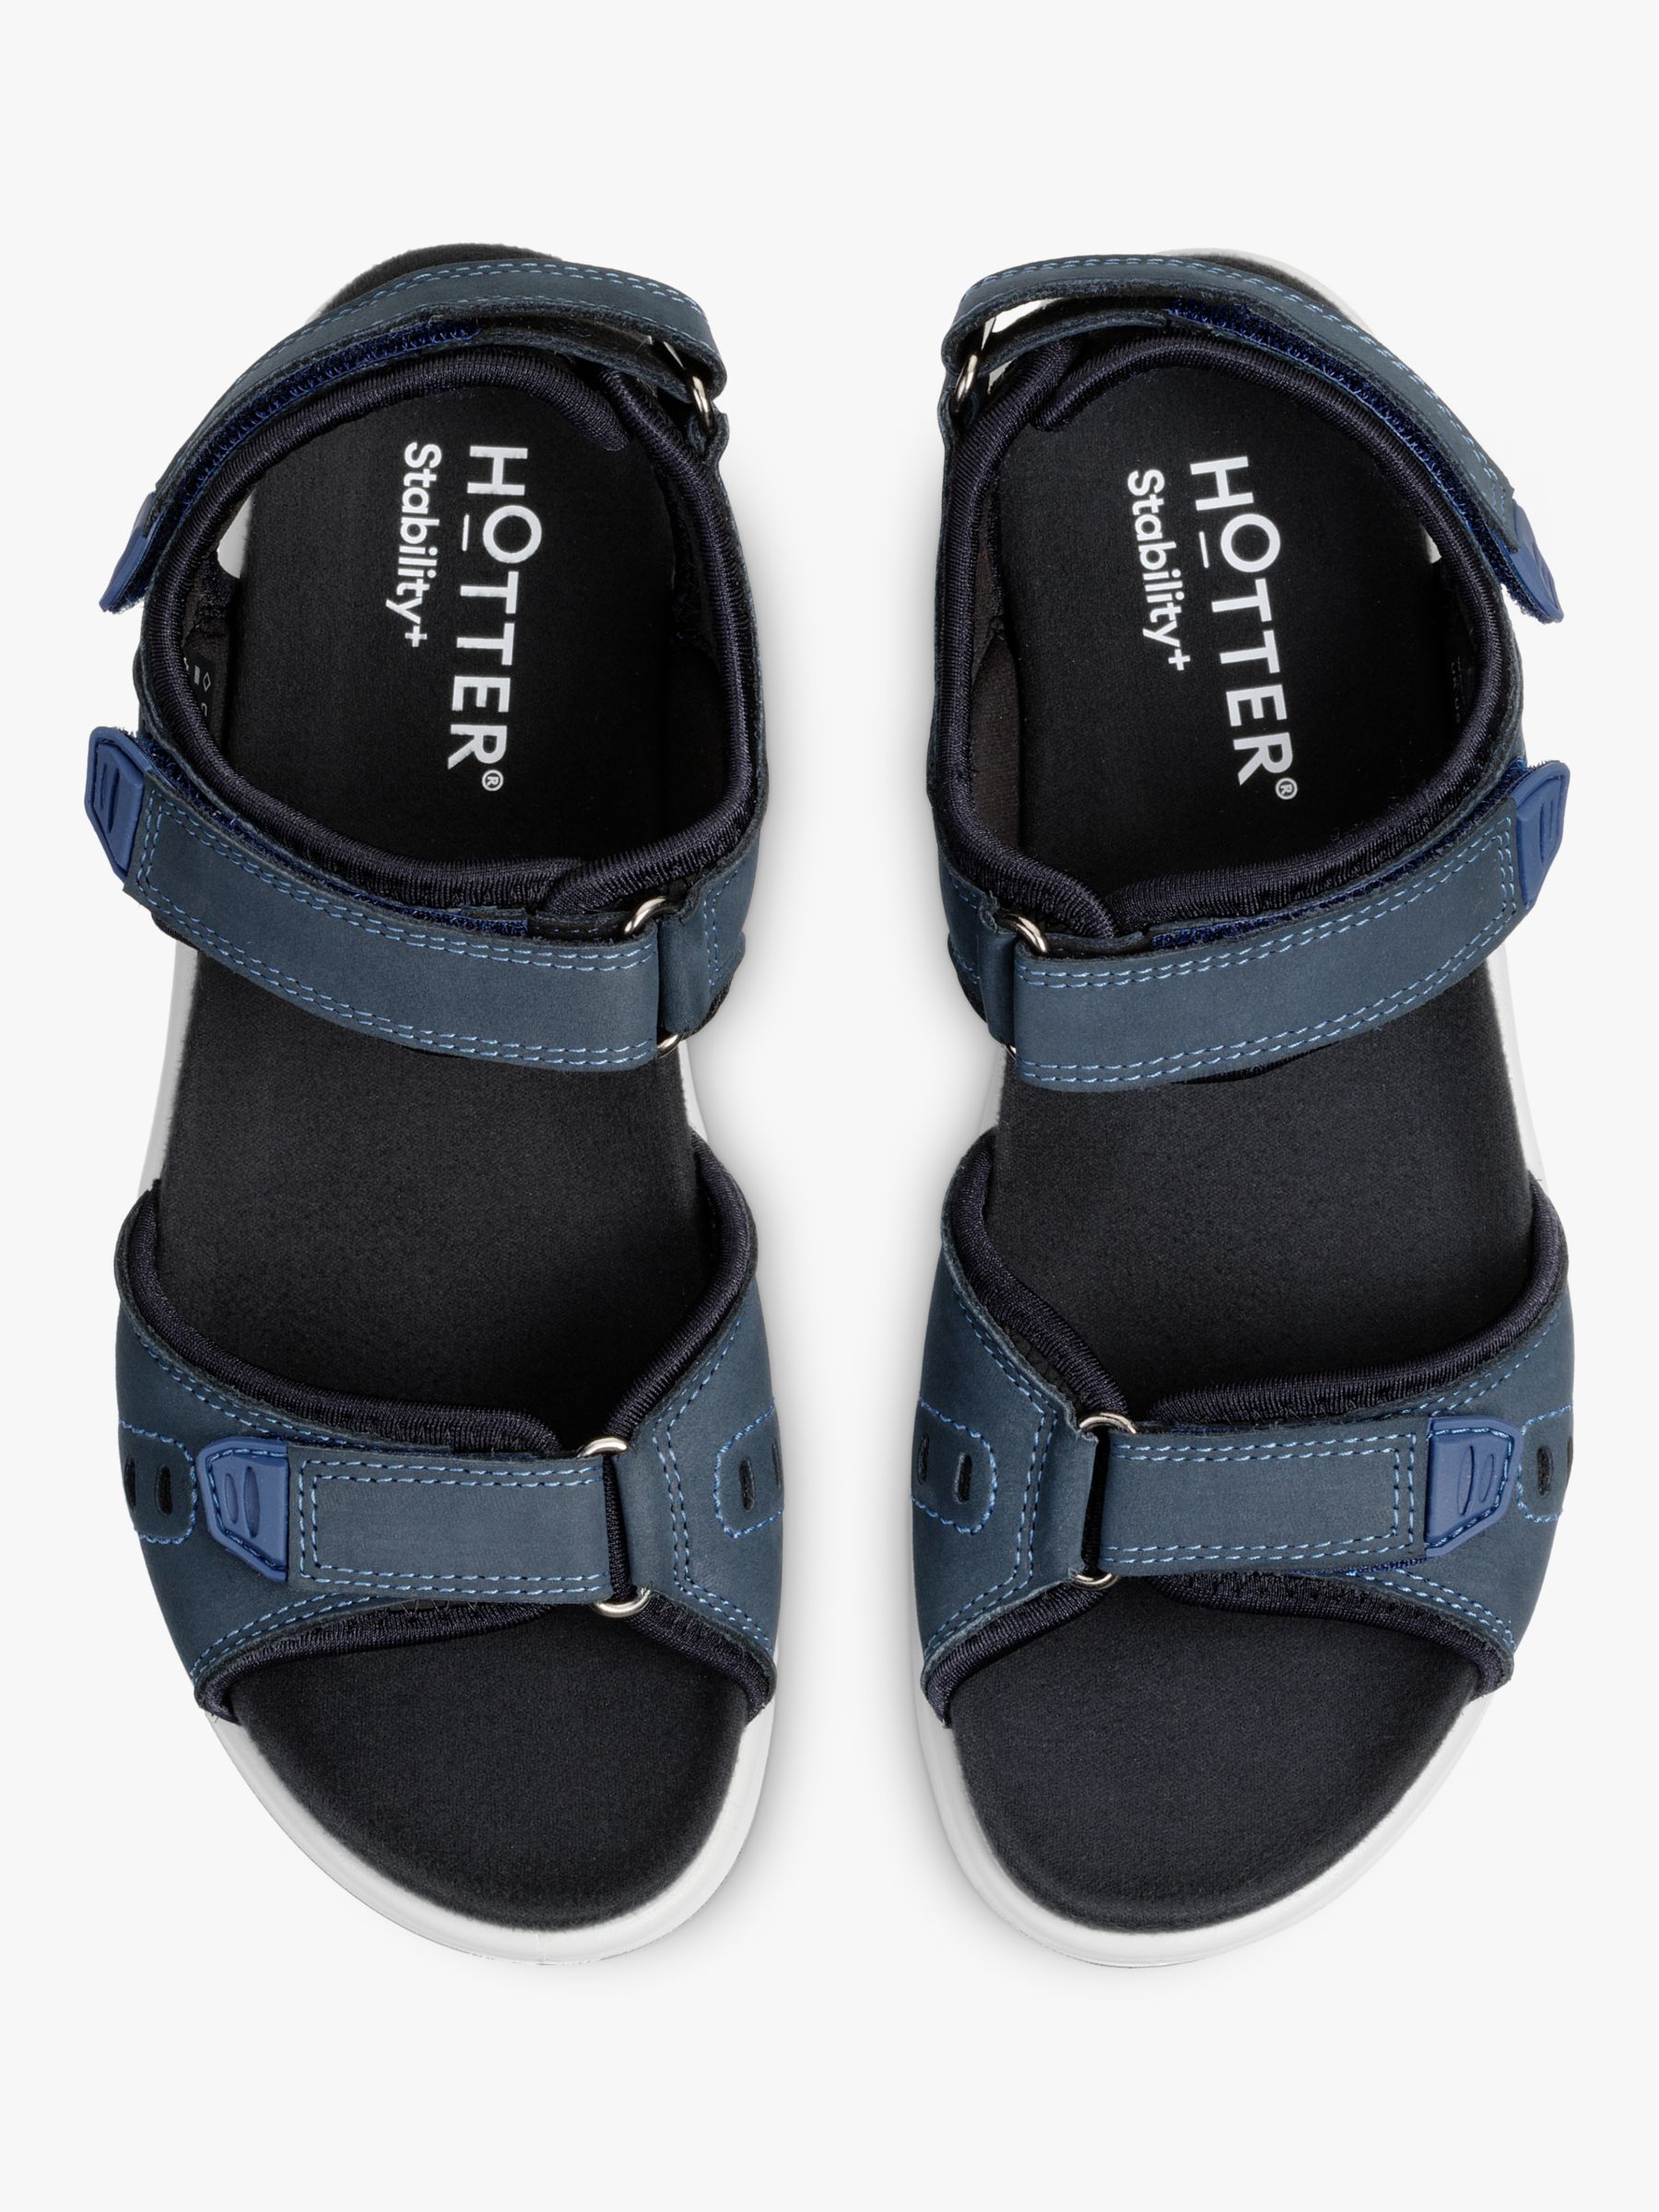 Buy Hotter Walk II Wide Fit Nubuck Lightweight Walking Sandals Online at johnlewis.com